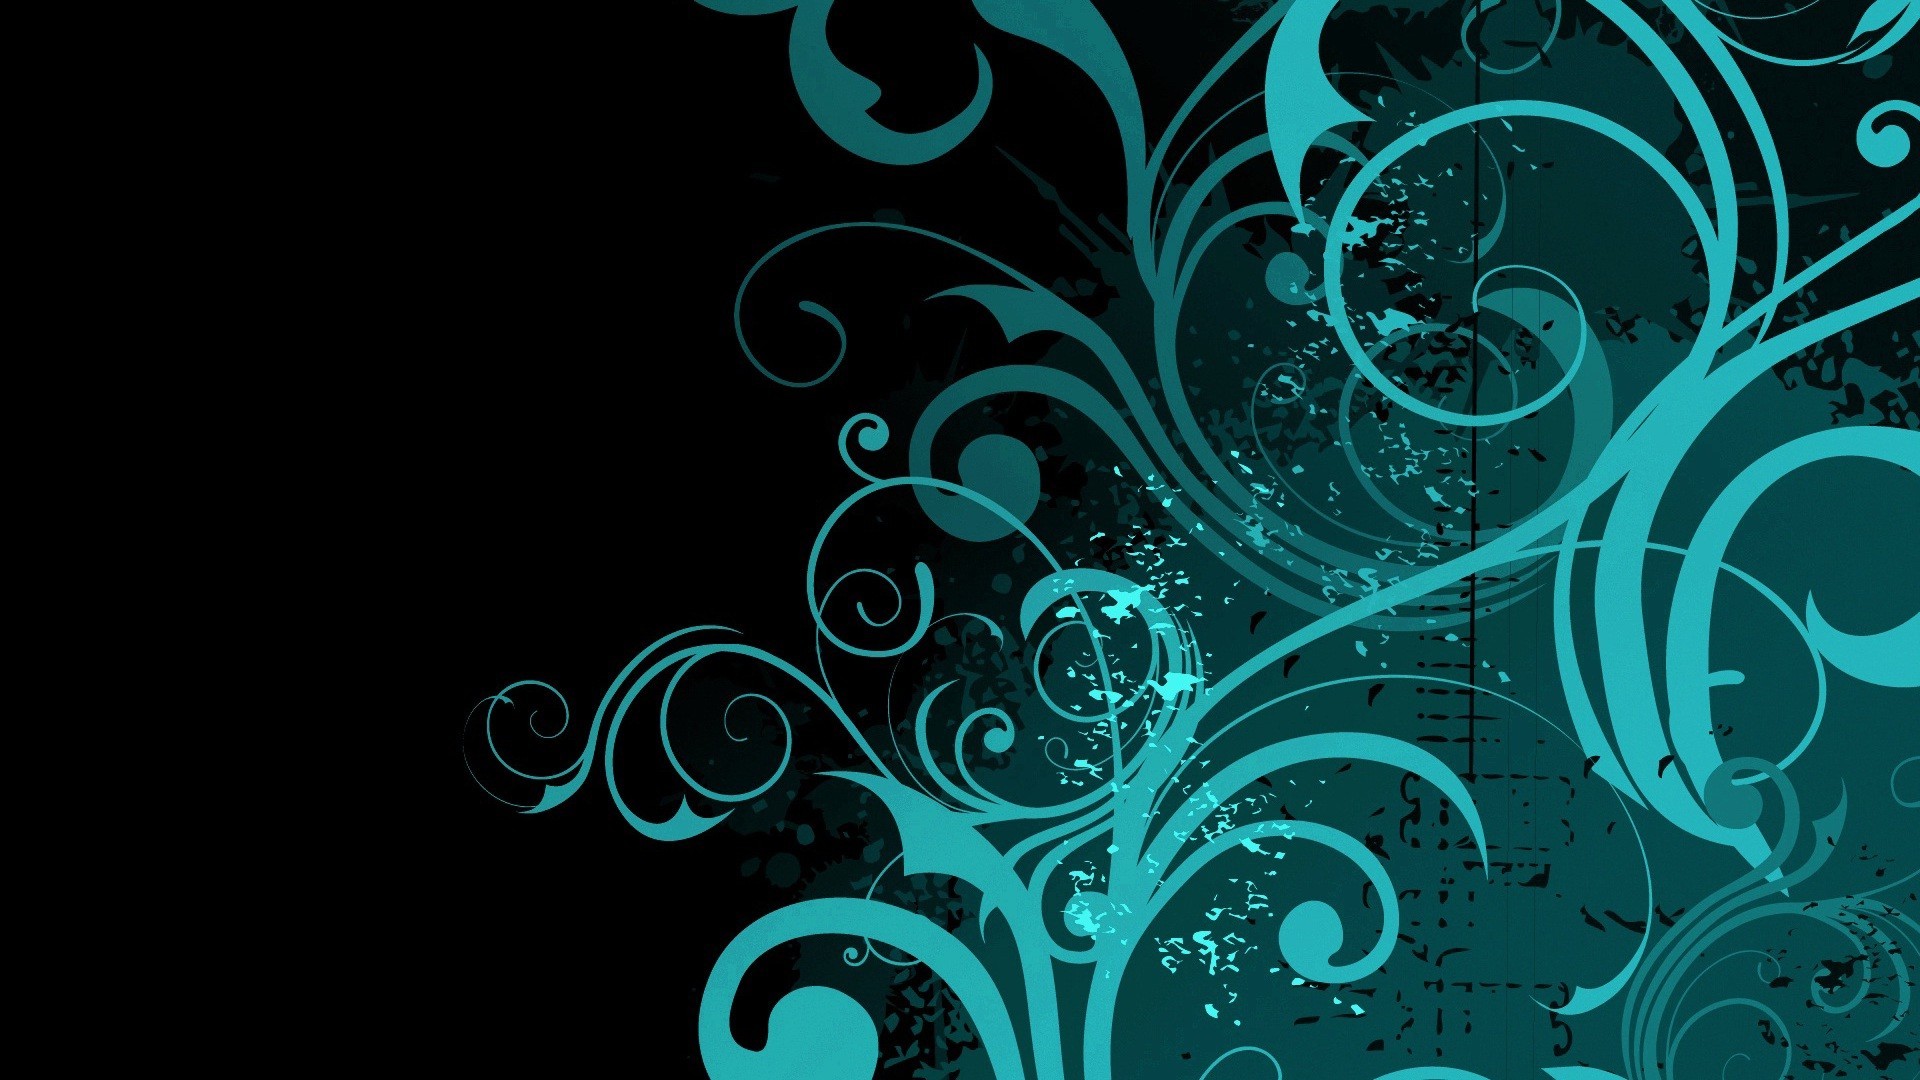 ... blue-swirls-abstract-hd-wallpaper-1920x1080 ...